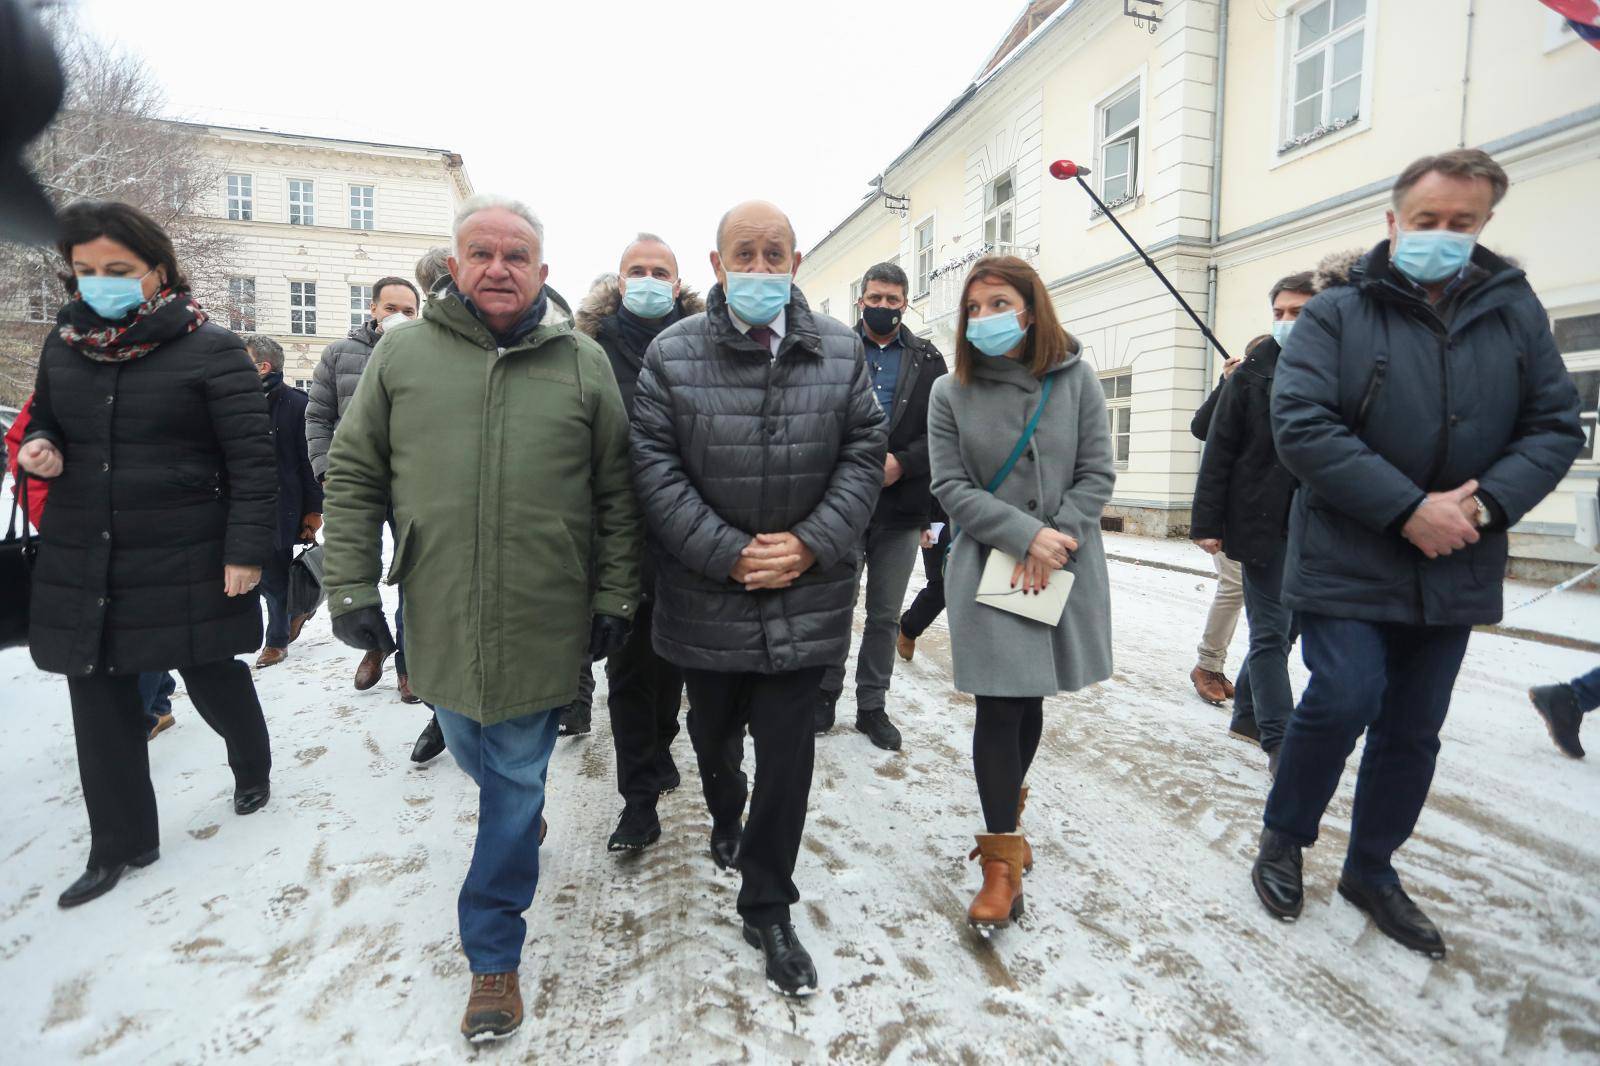 Ministar Gordan Grlić Radman i francuski ministar Jean-Yves Le Drian obišli centar Petrinje